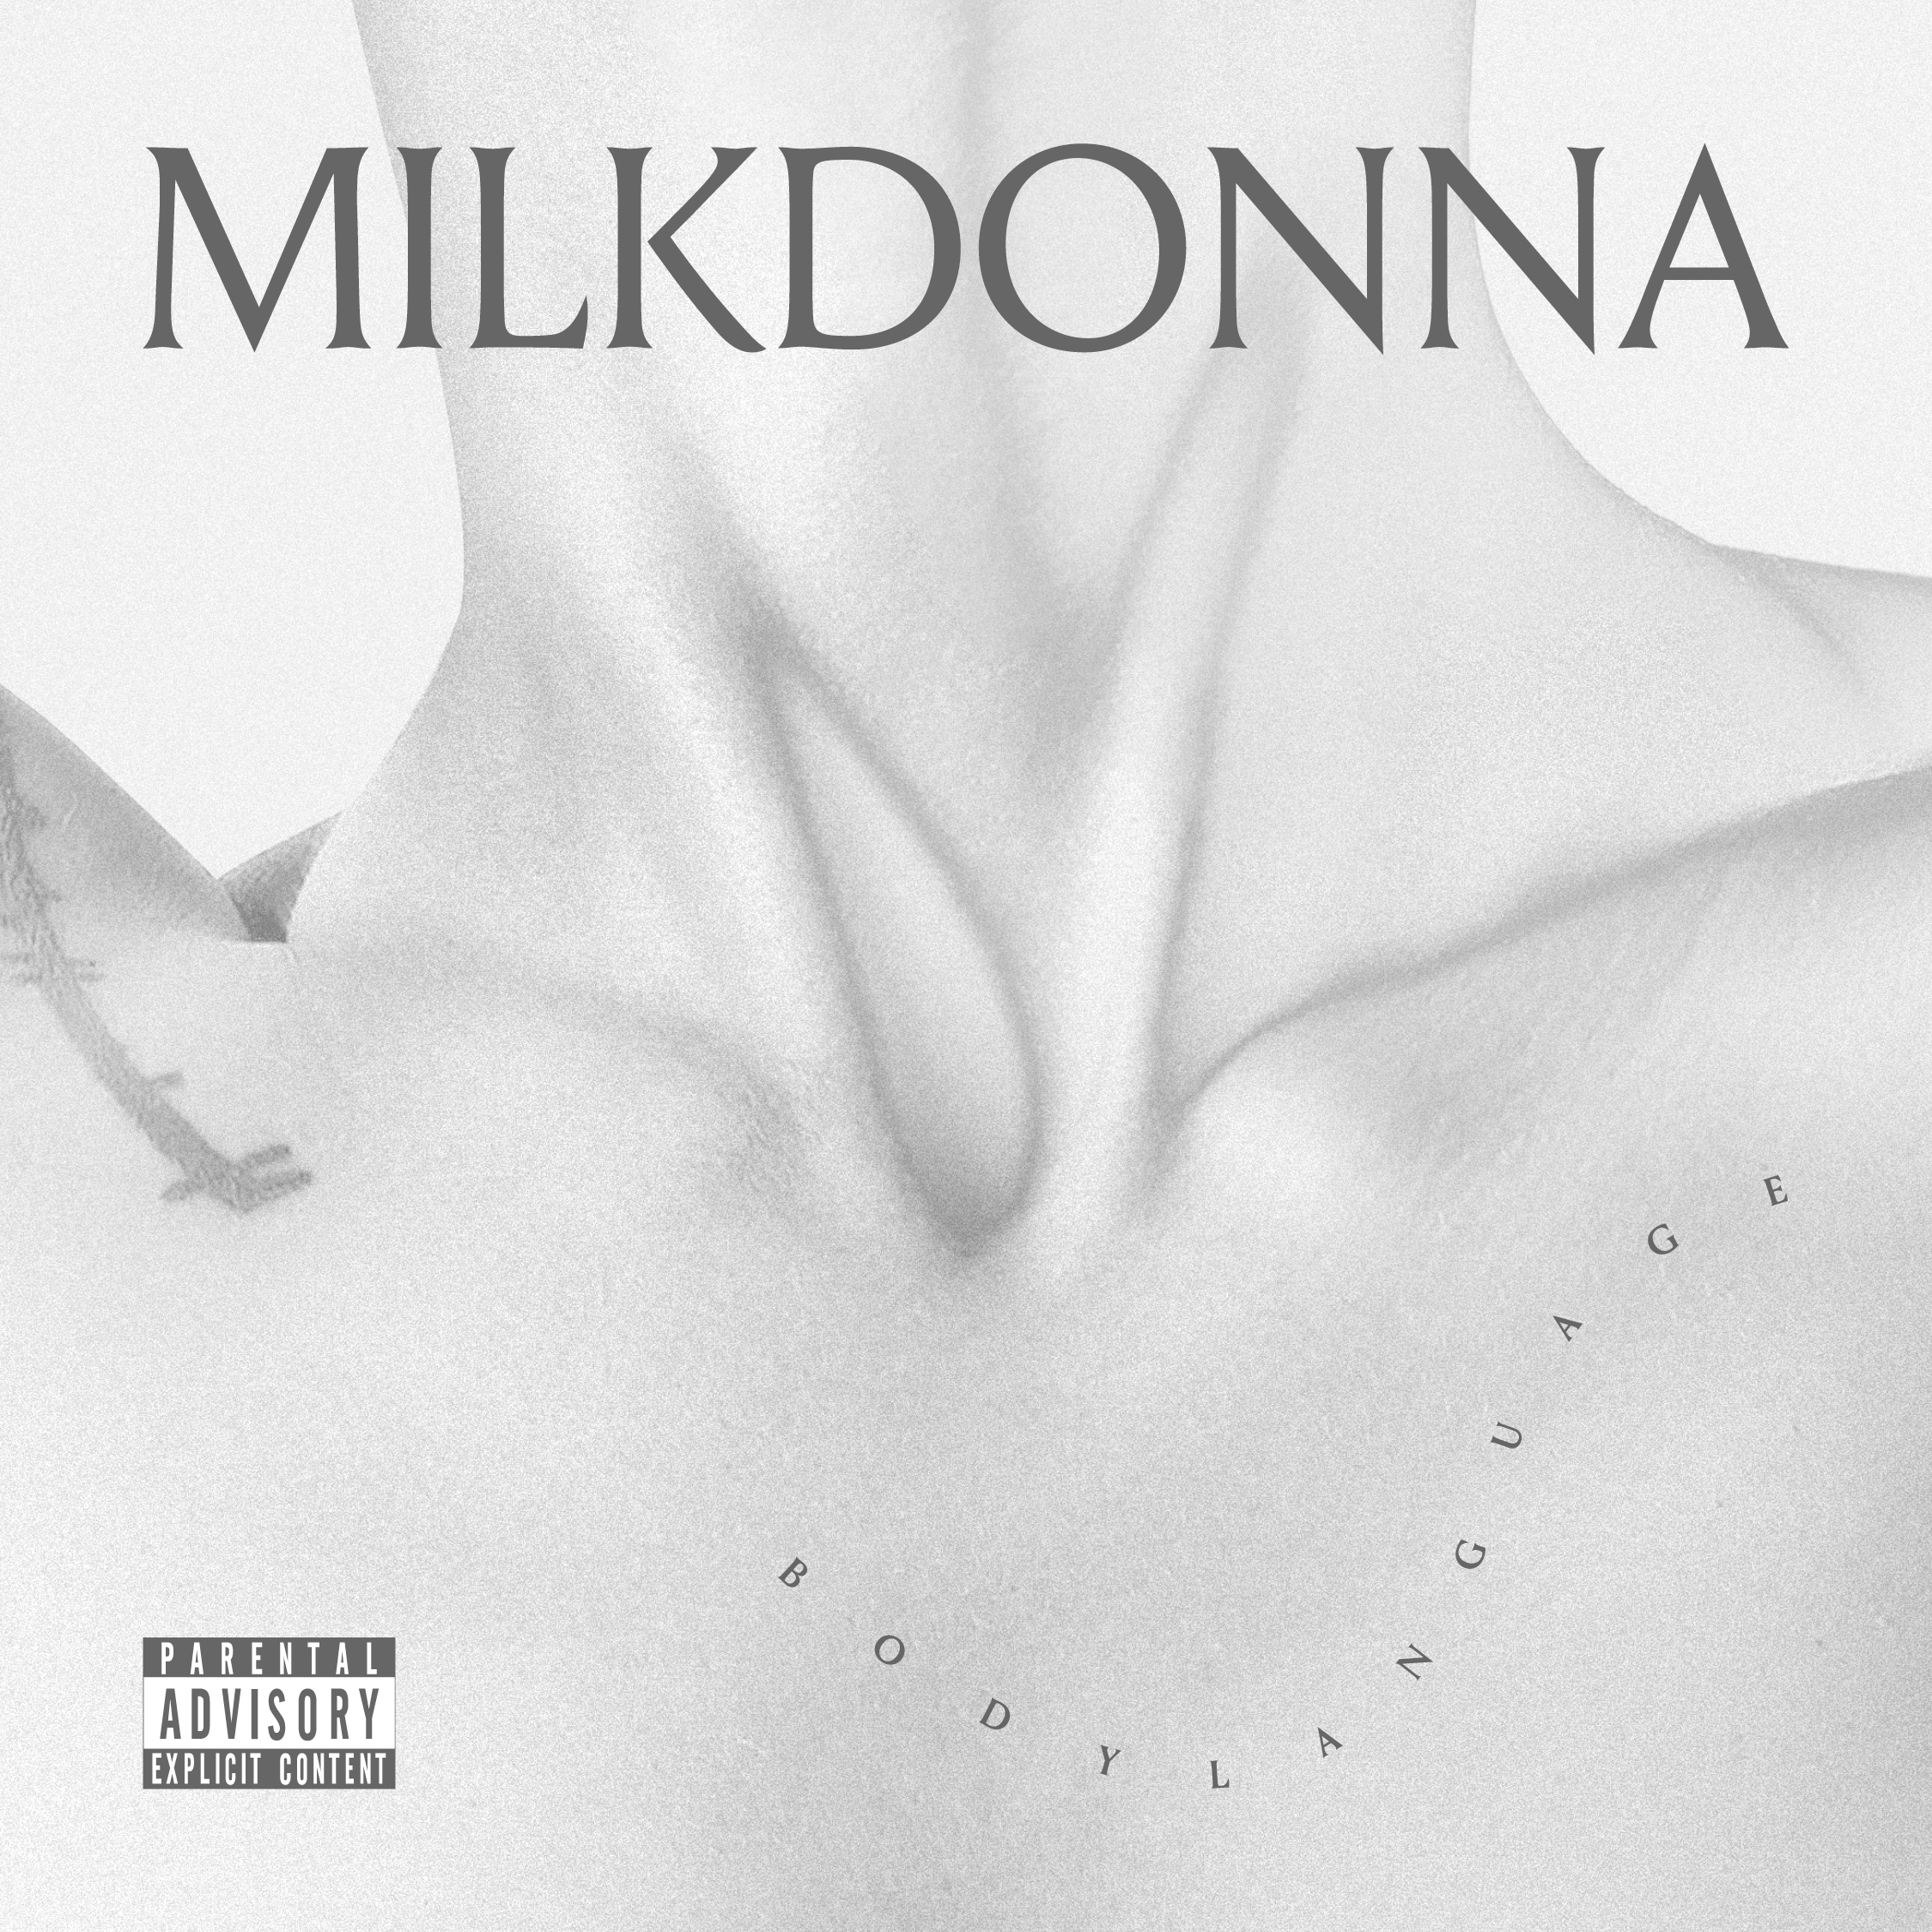 From São Paulo to Europe, Milkdonna brings Disco Fused With Latin Underground to Alphabeat Records